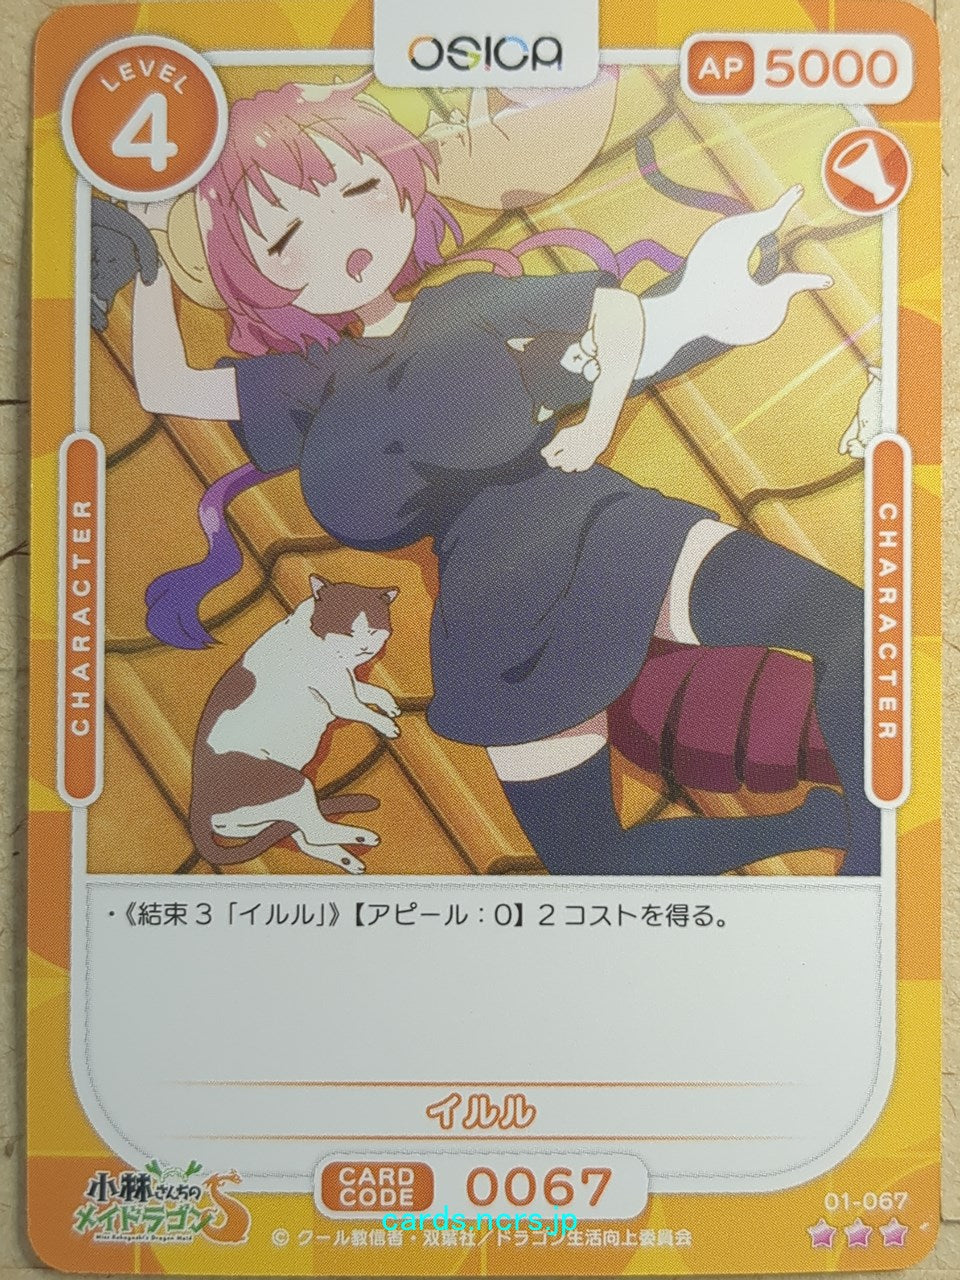 OSICA Miss Kobayashi's Dragon Maid -Ilulu-   Trading Card OS/KOB-01-067